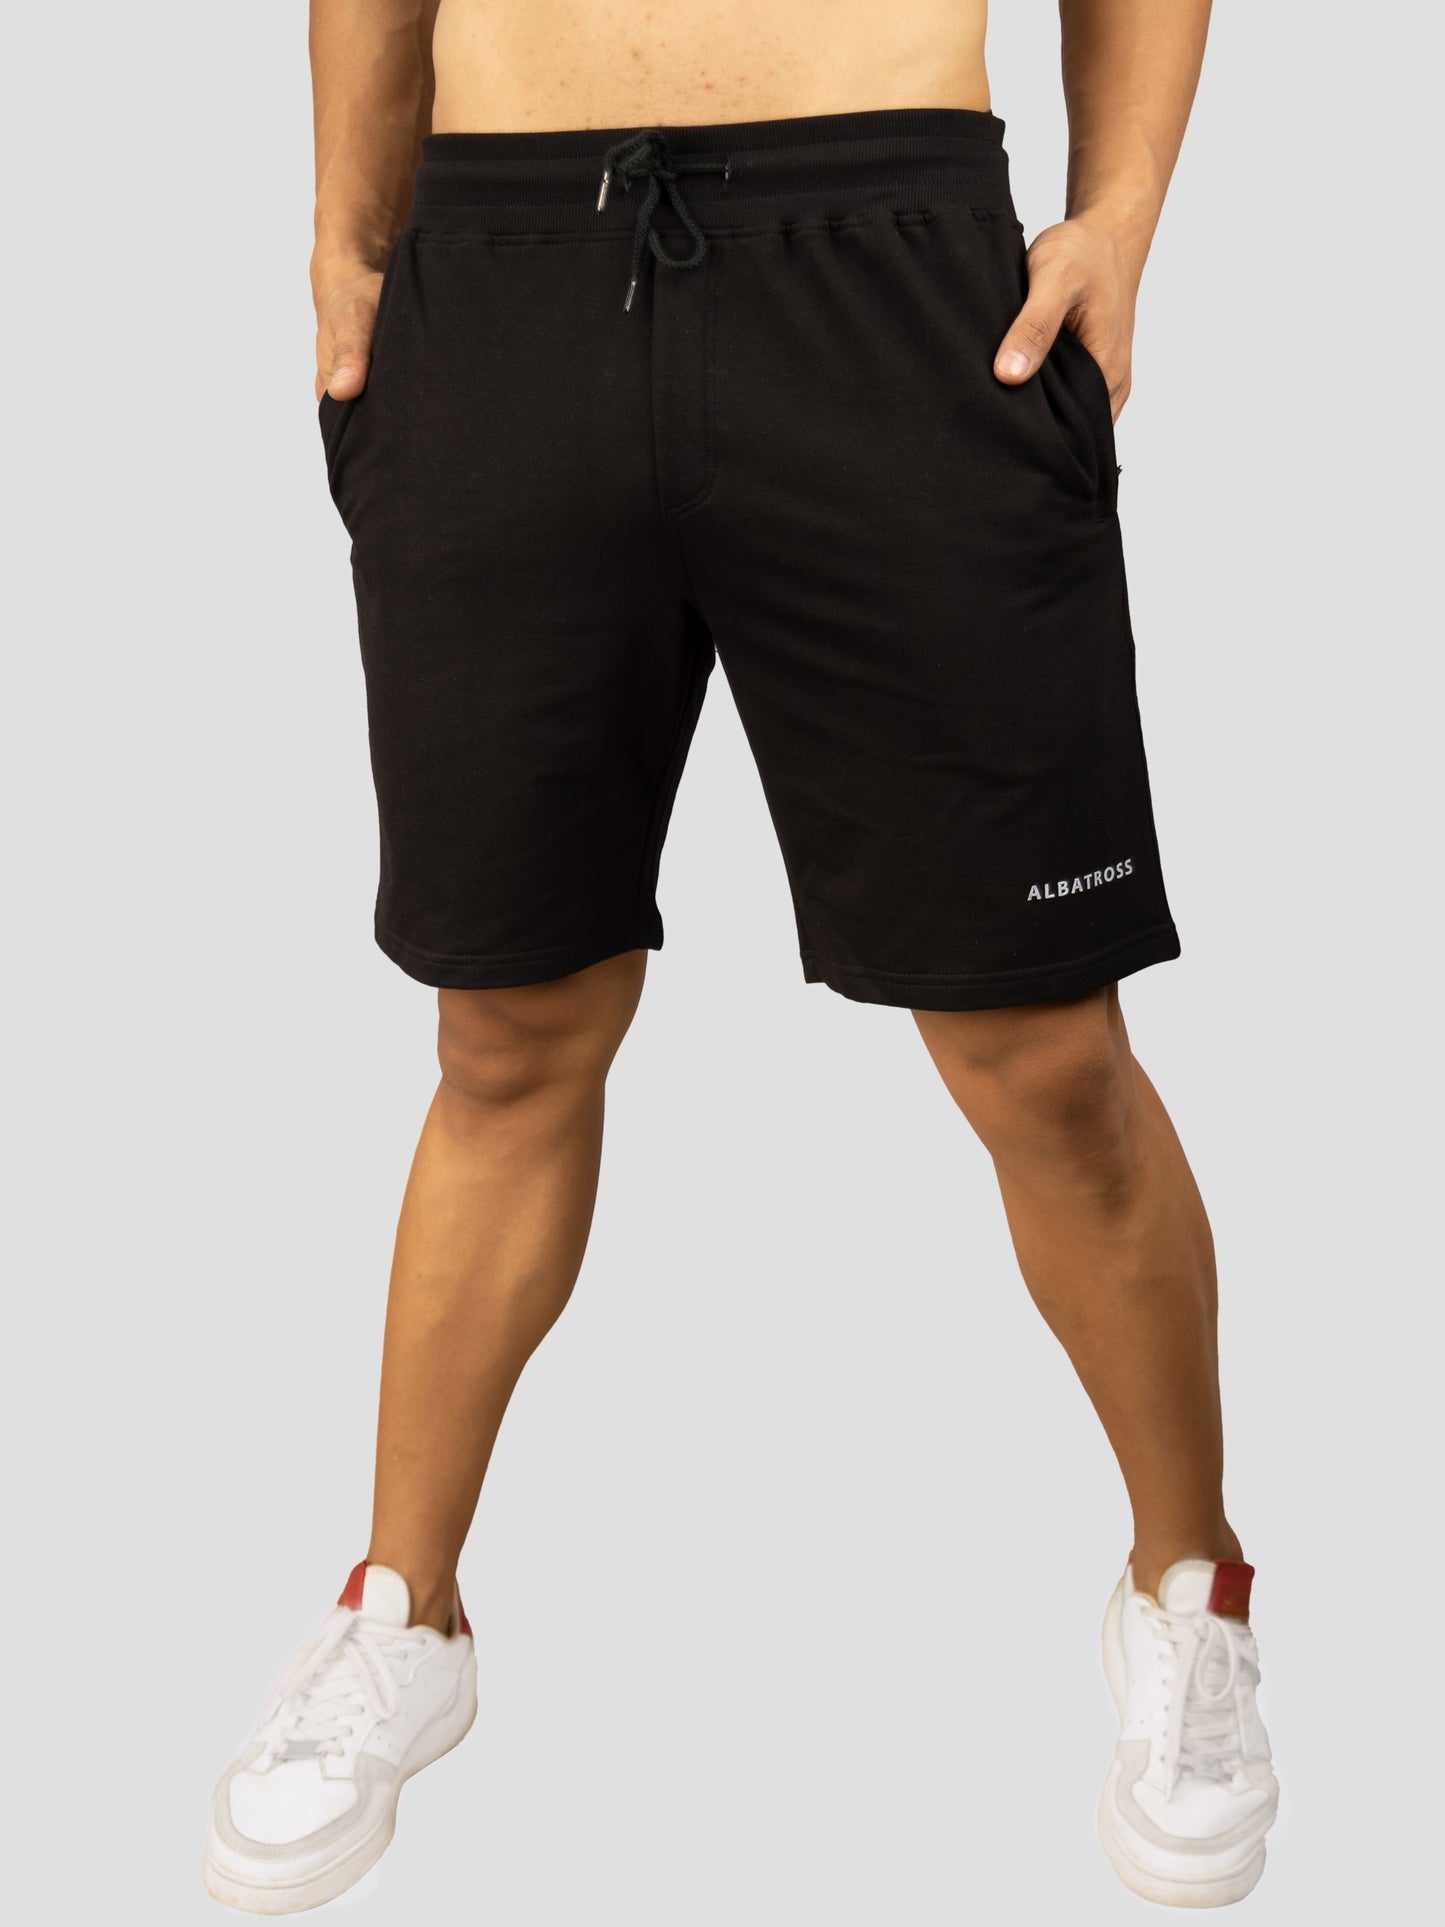 Black casual premium loopknit shorts for men